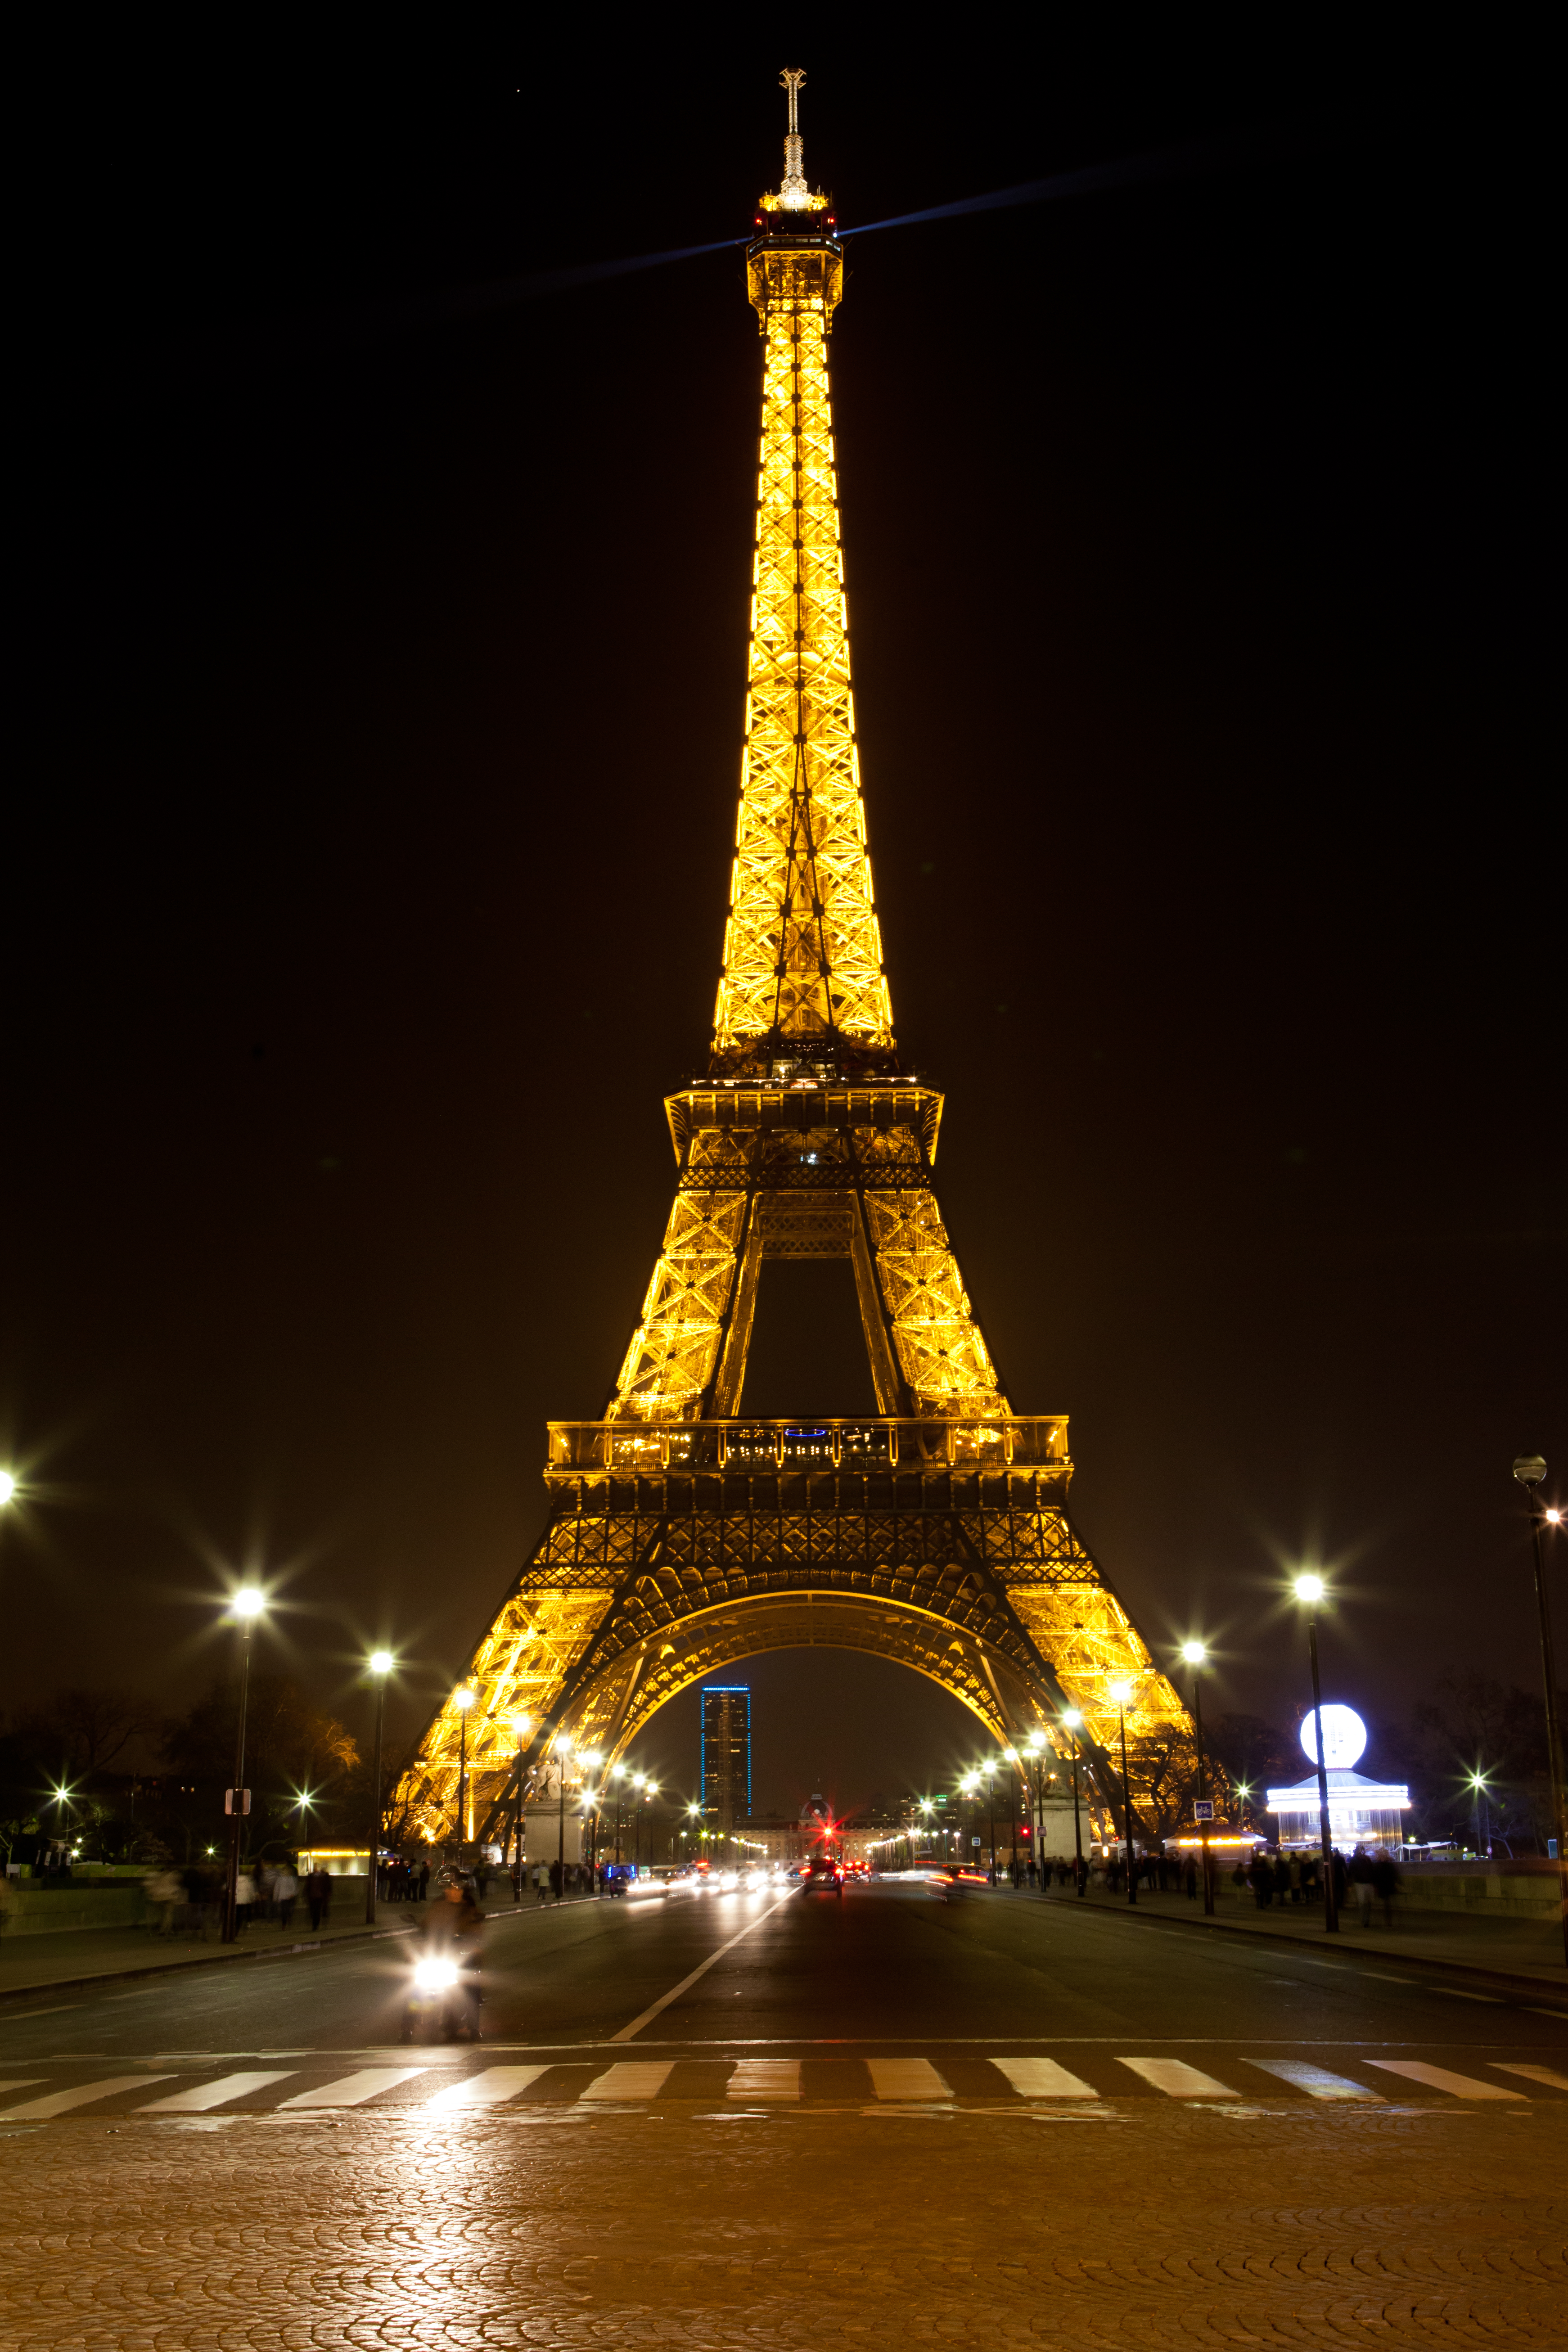 File:Eiffel Tower in Las Vegas (Paris) at night.jpg - Wikimedia Commons